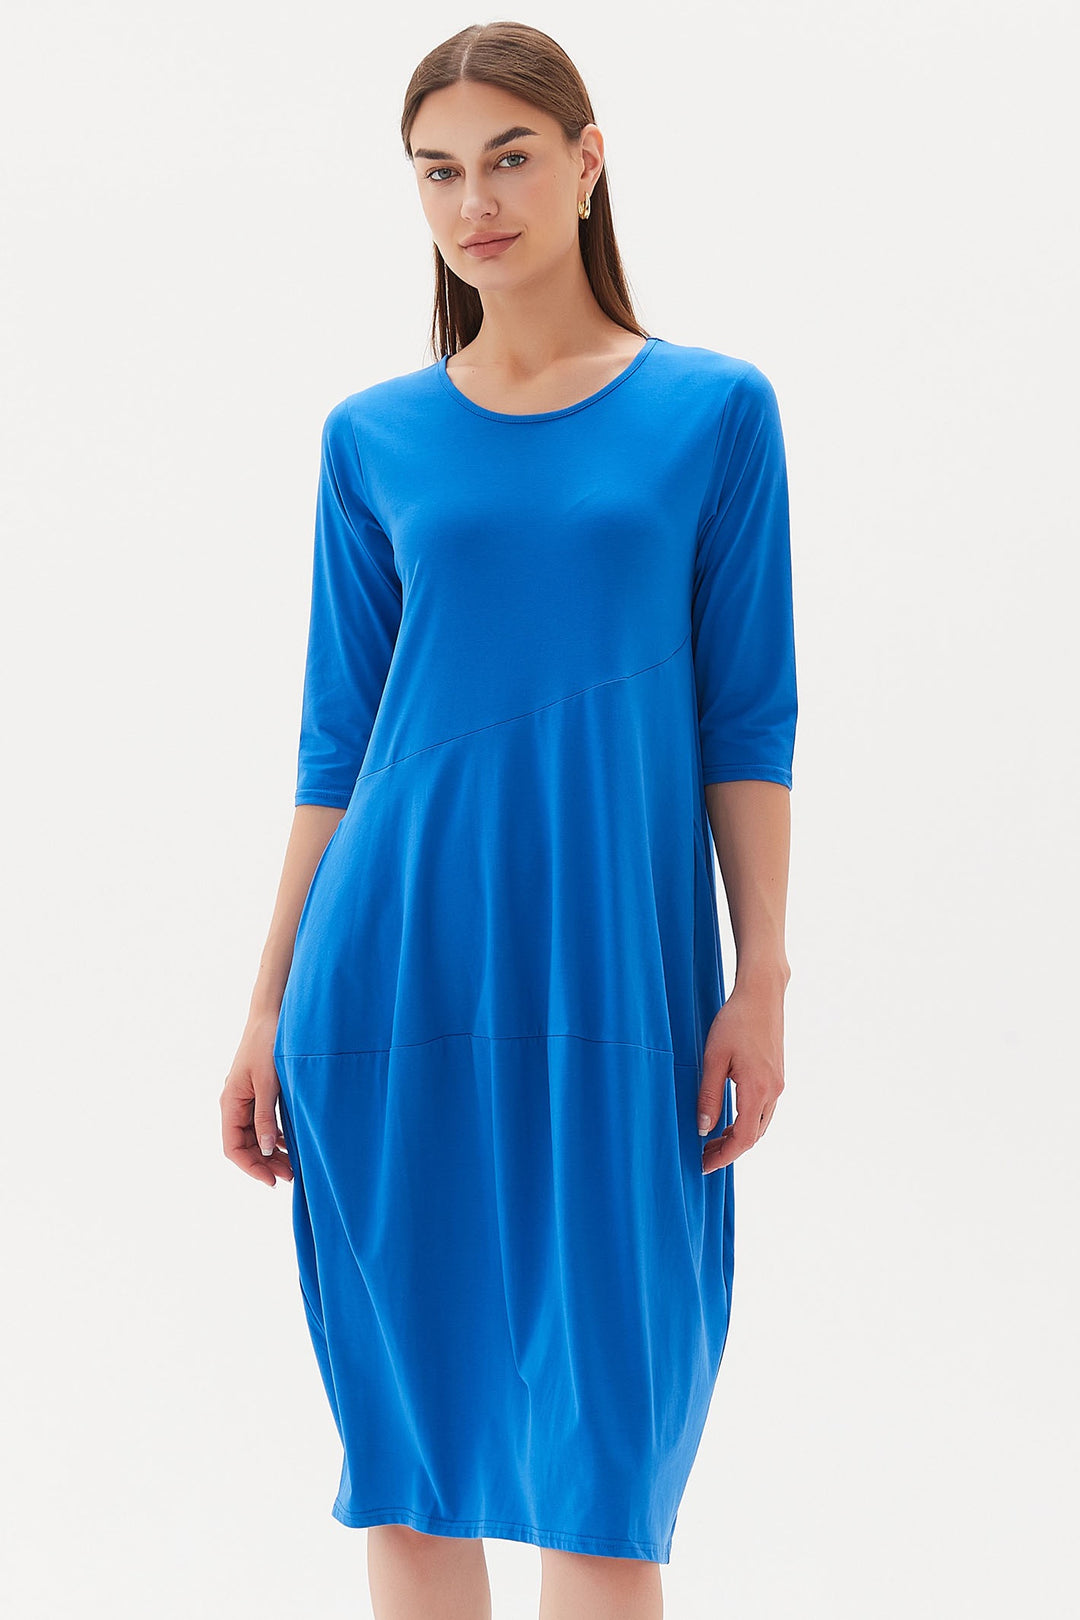 Tirelli 23D3103 Cornflower Blue Diagonal Seam Cotton Dress - Dotique